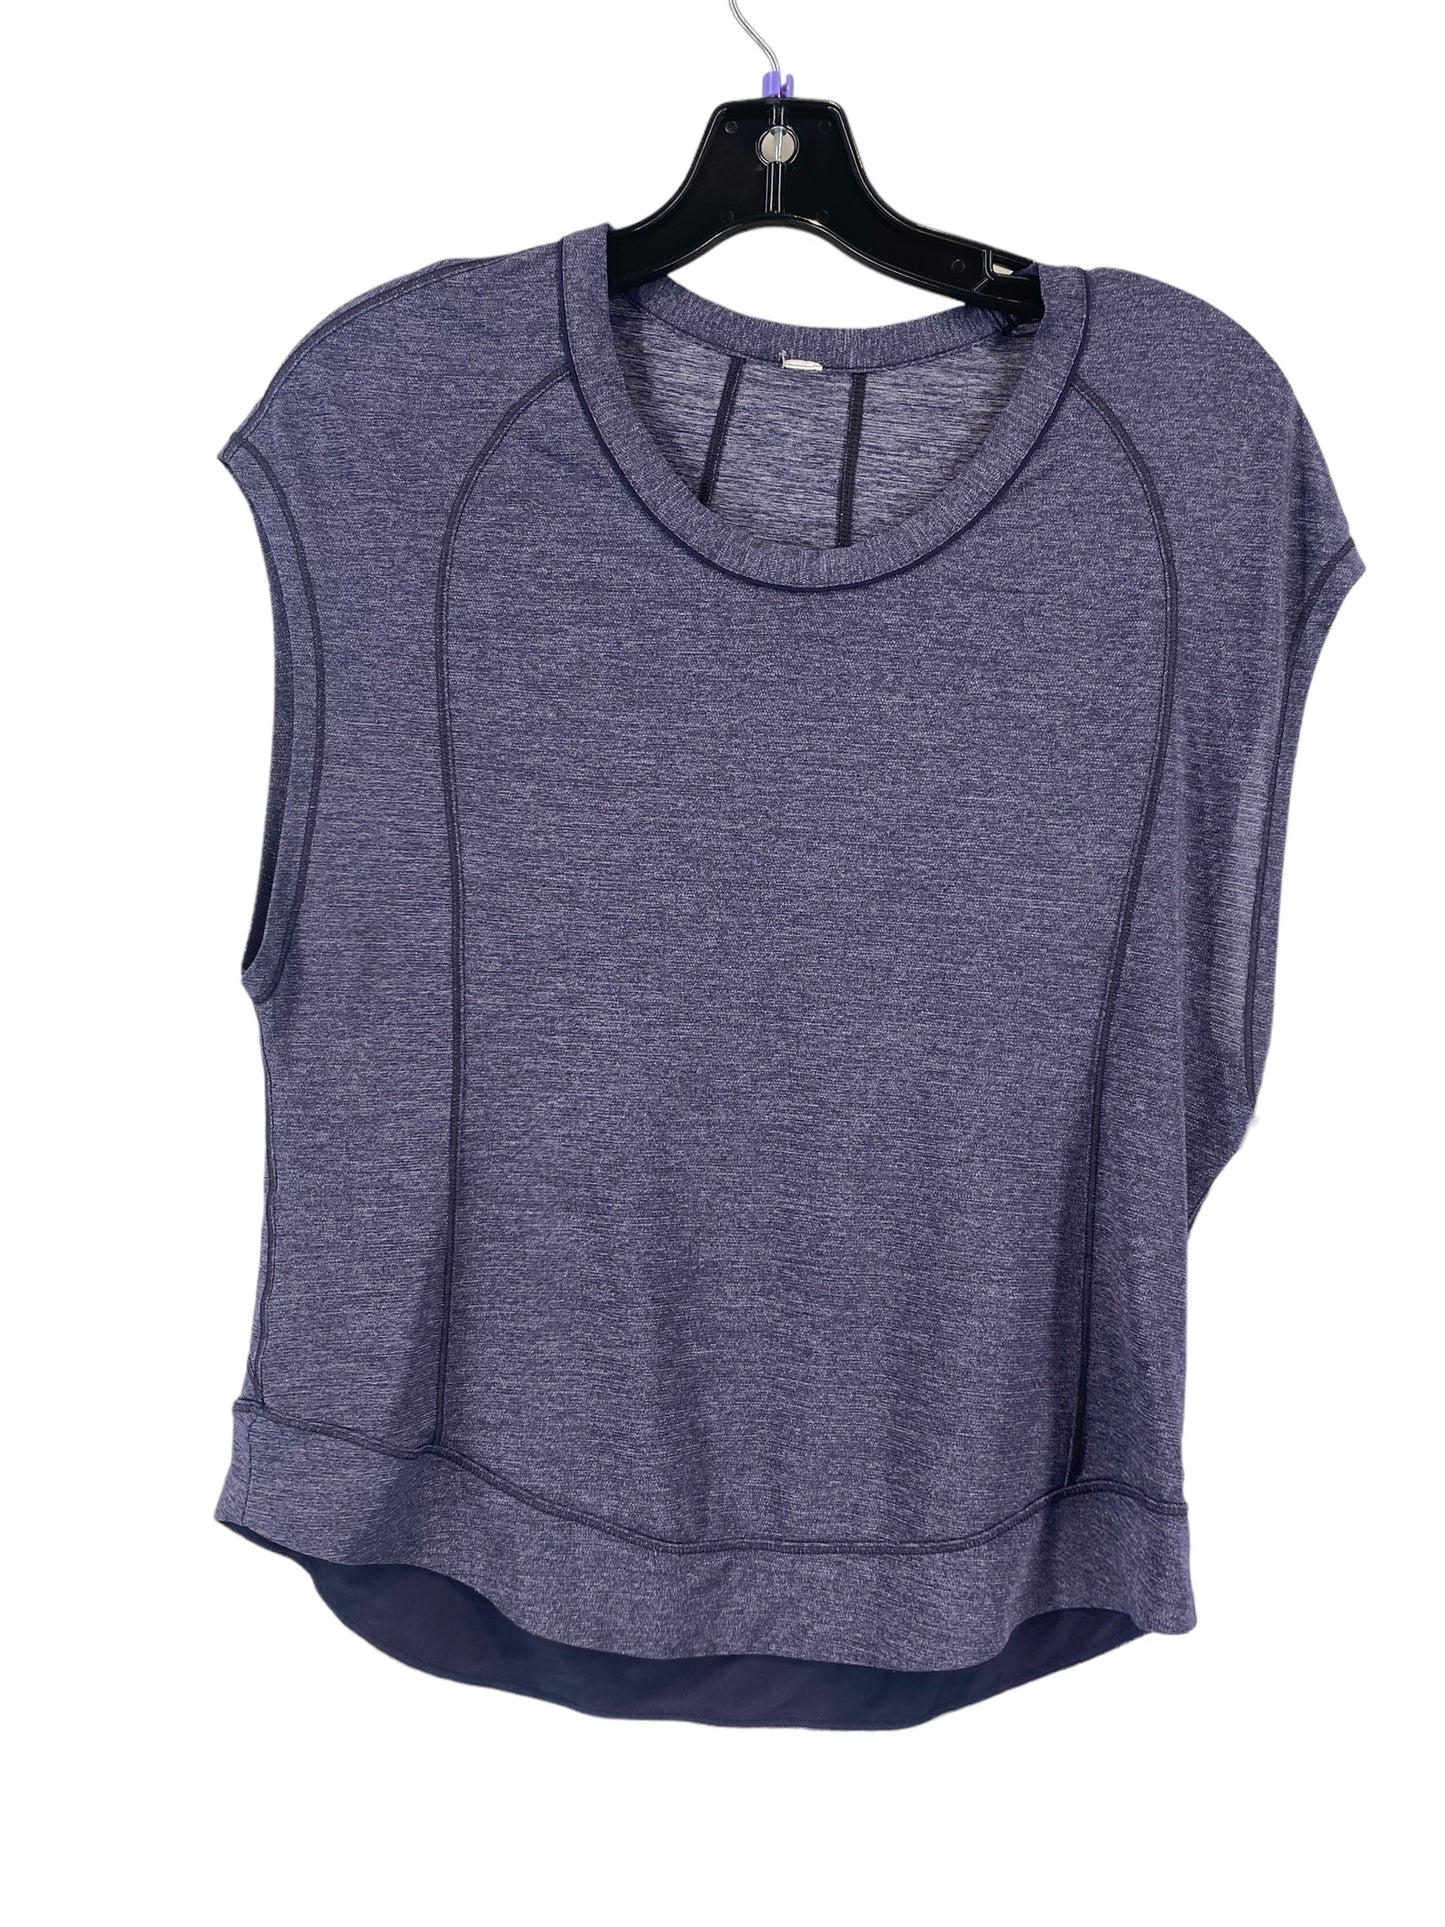 Purple Athletic Top Short Sleeve Lululemon, Size M